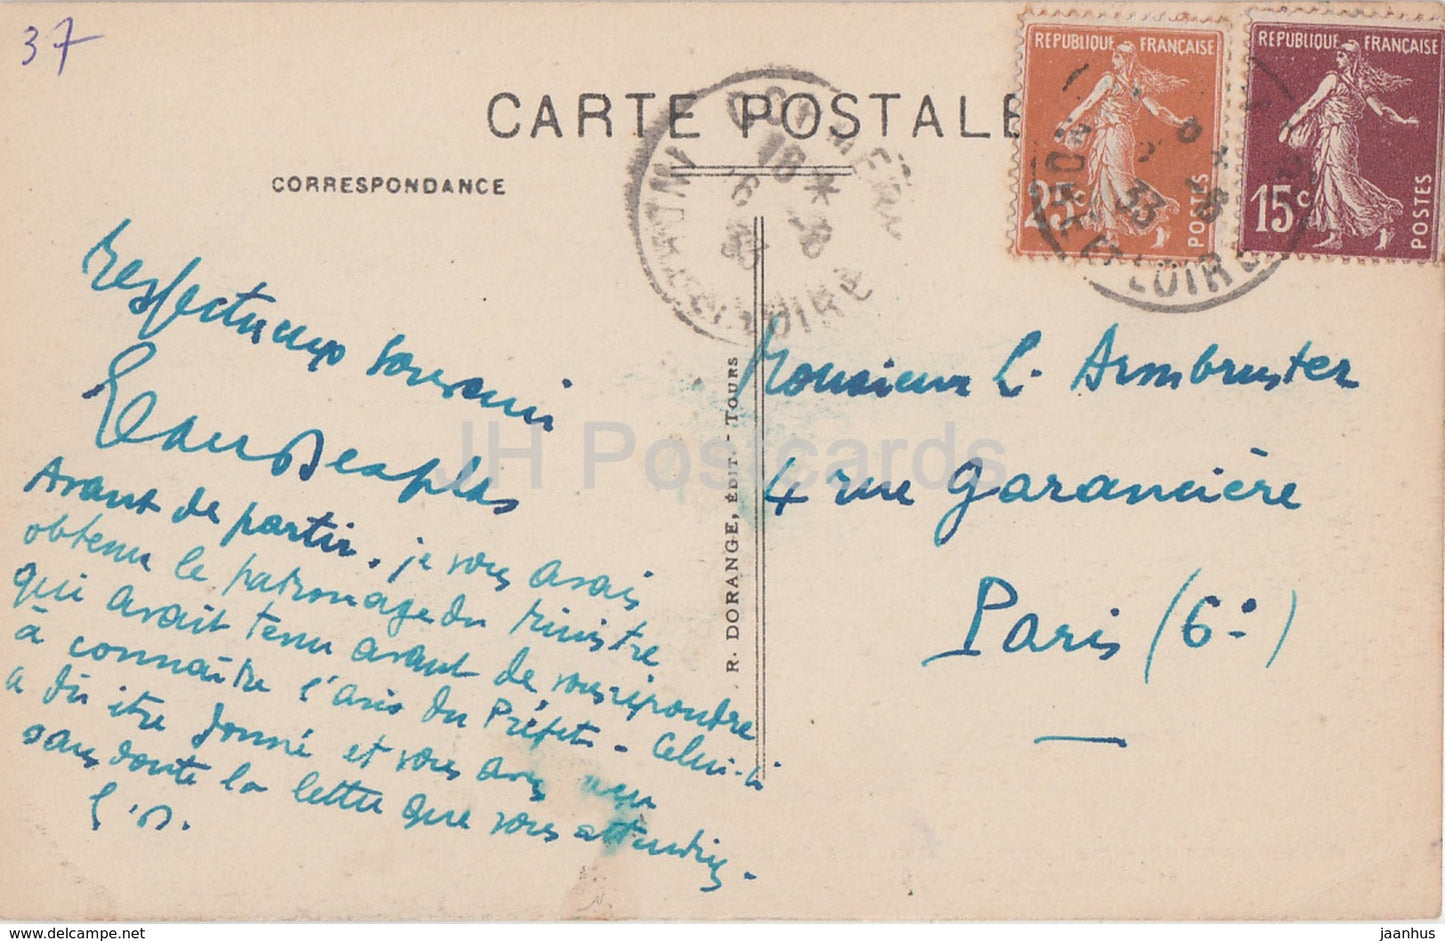 Loches - Le Donjon - Cachot ou fut enferme Ludovic Sforza - castle - 13 - old postcard - 1933 - France - used